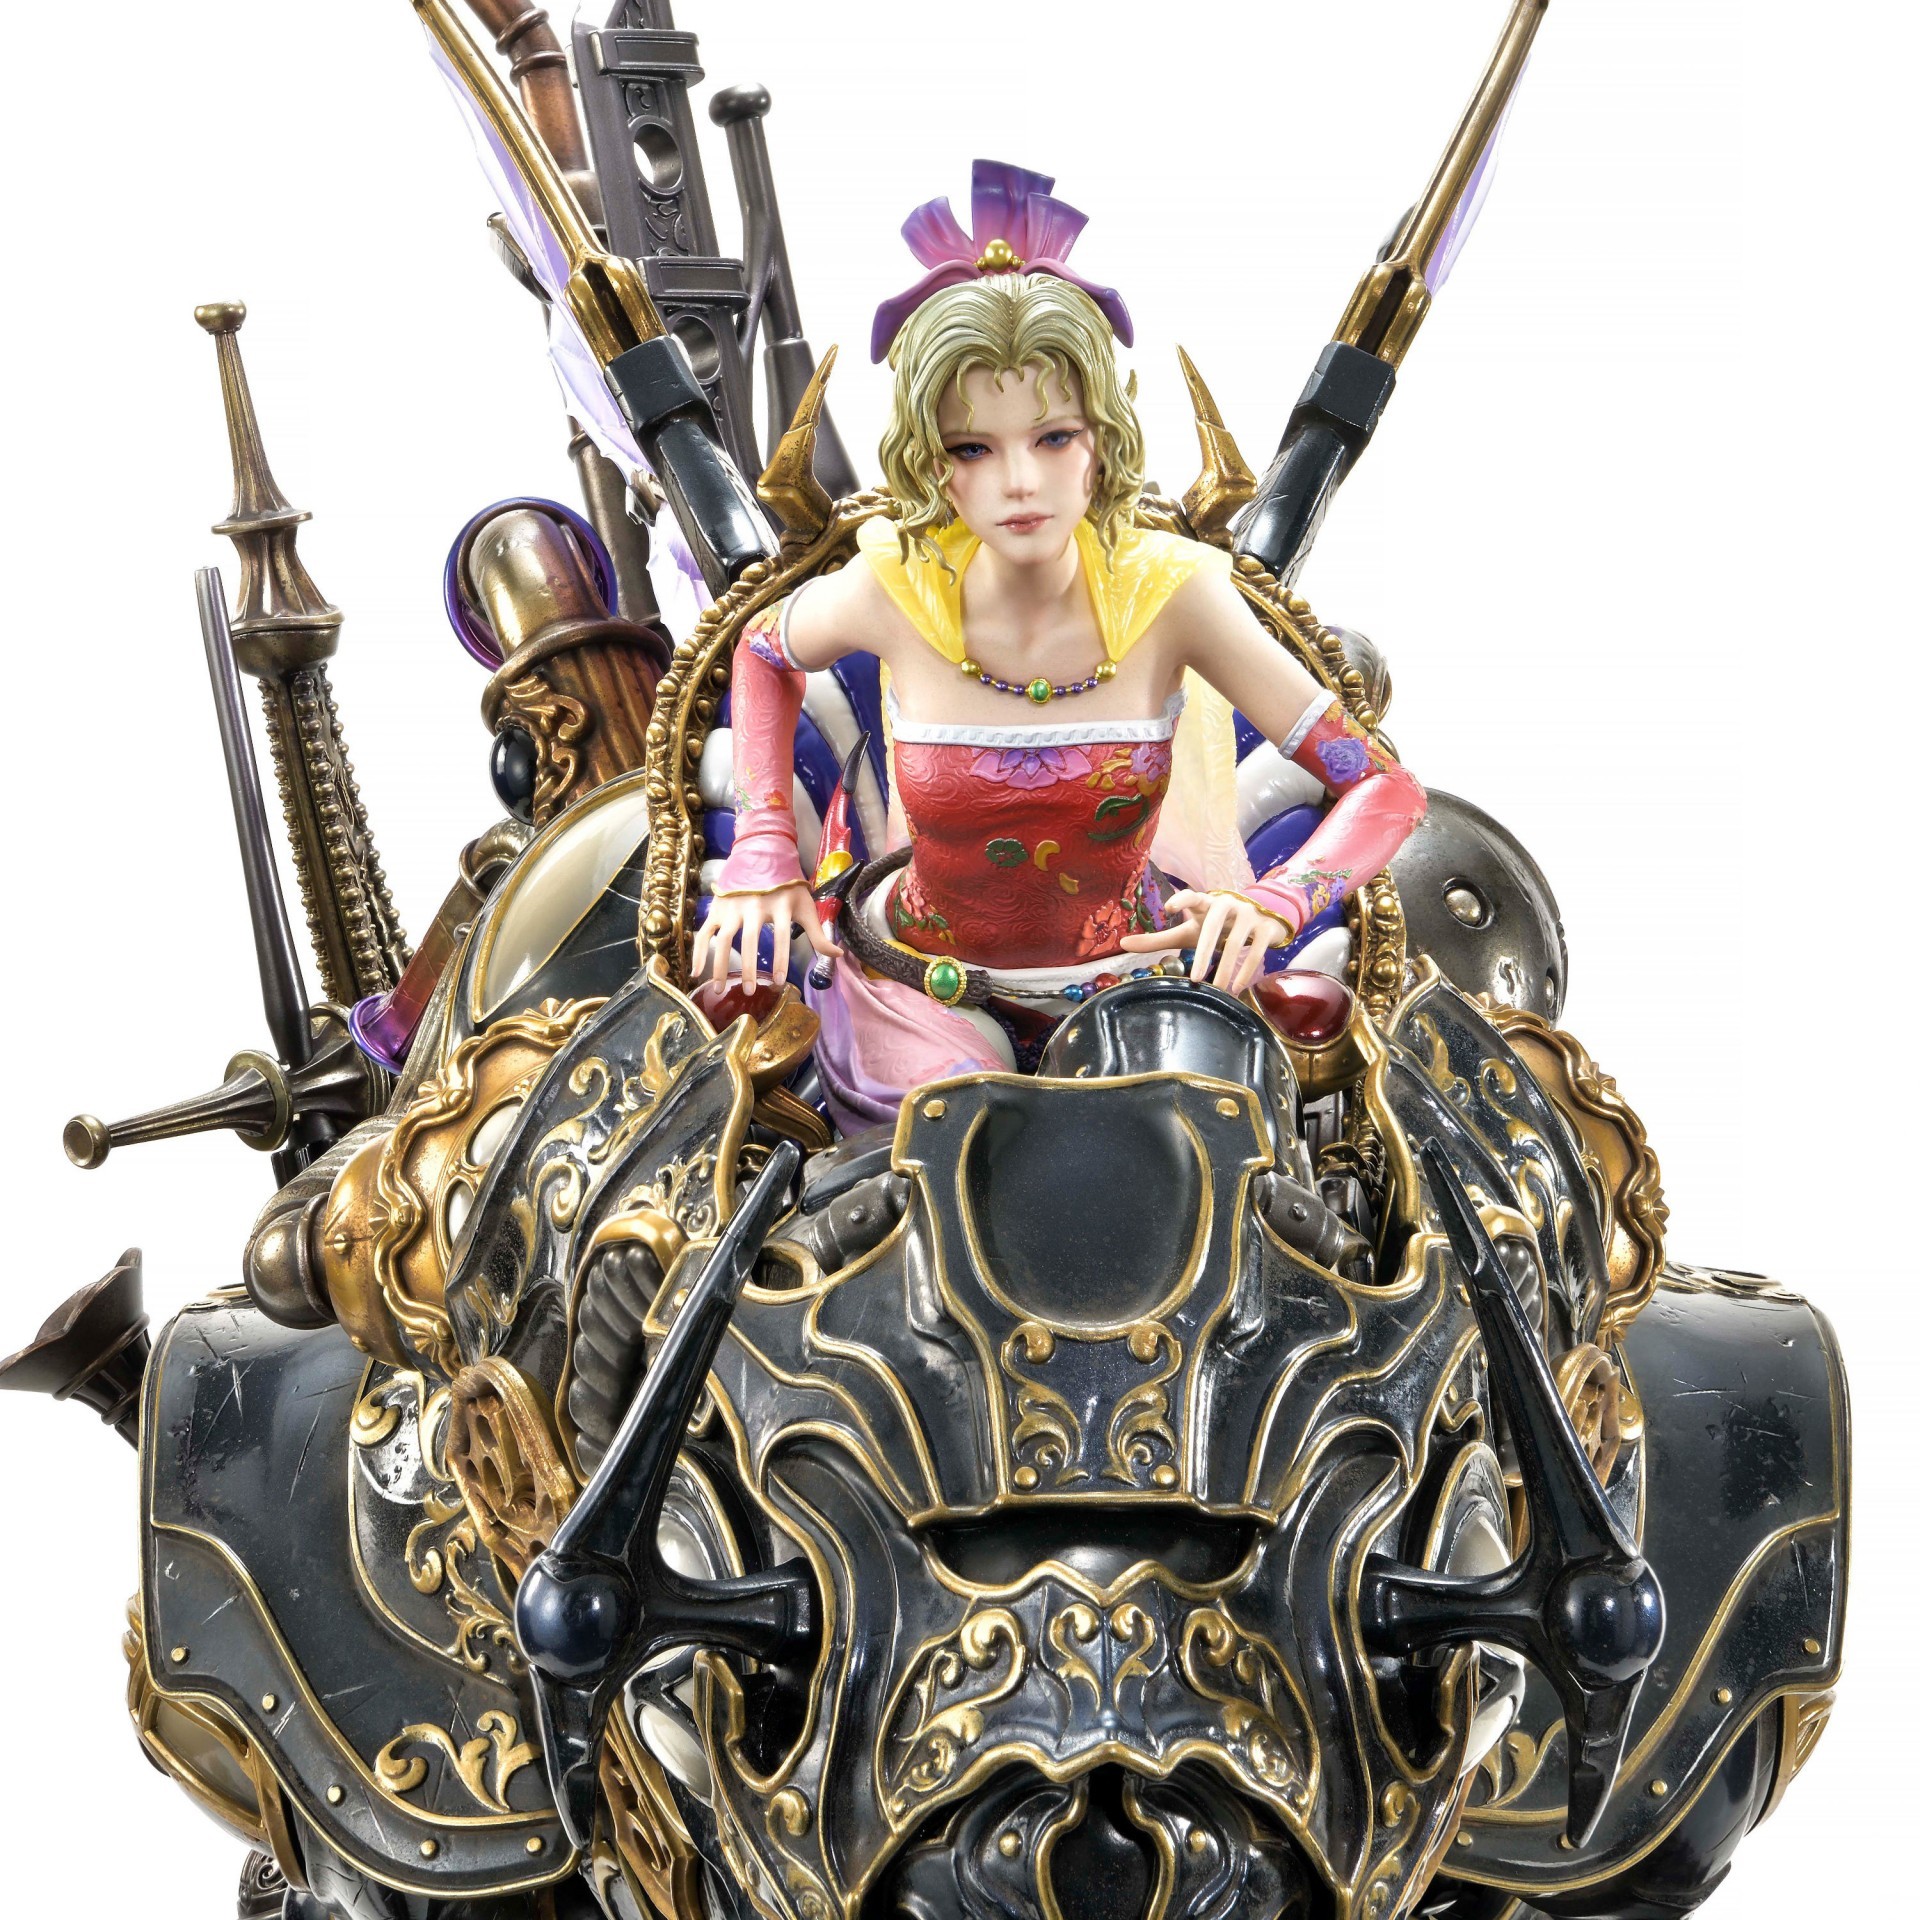 《Final Fantasy VI》蒂娜與魔法裝甲 1/6 模型 7 月推出 全球限量 600 組要價 148 萬日圓